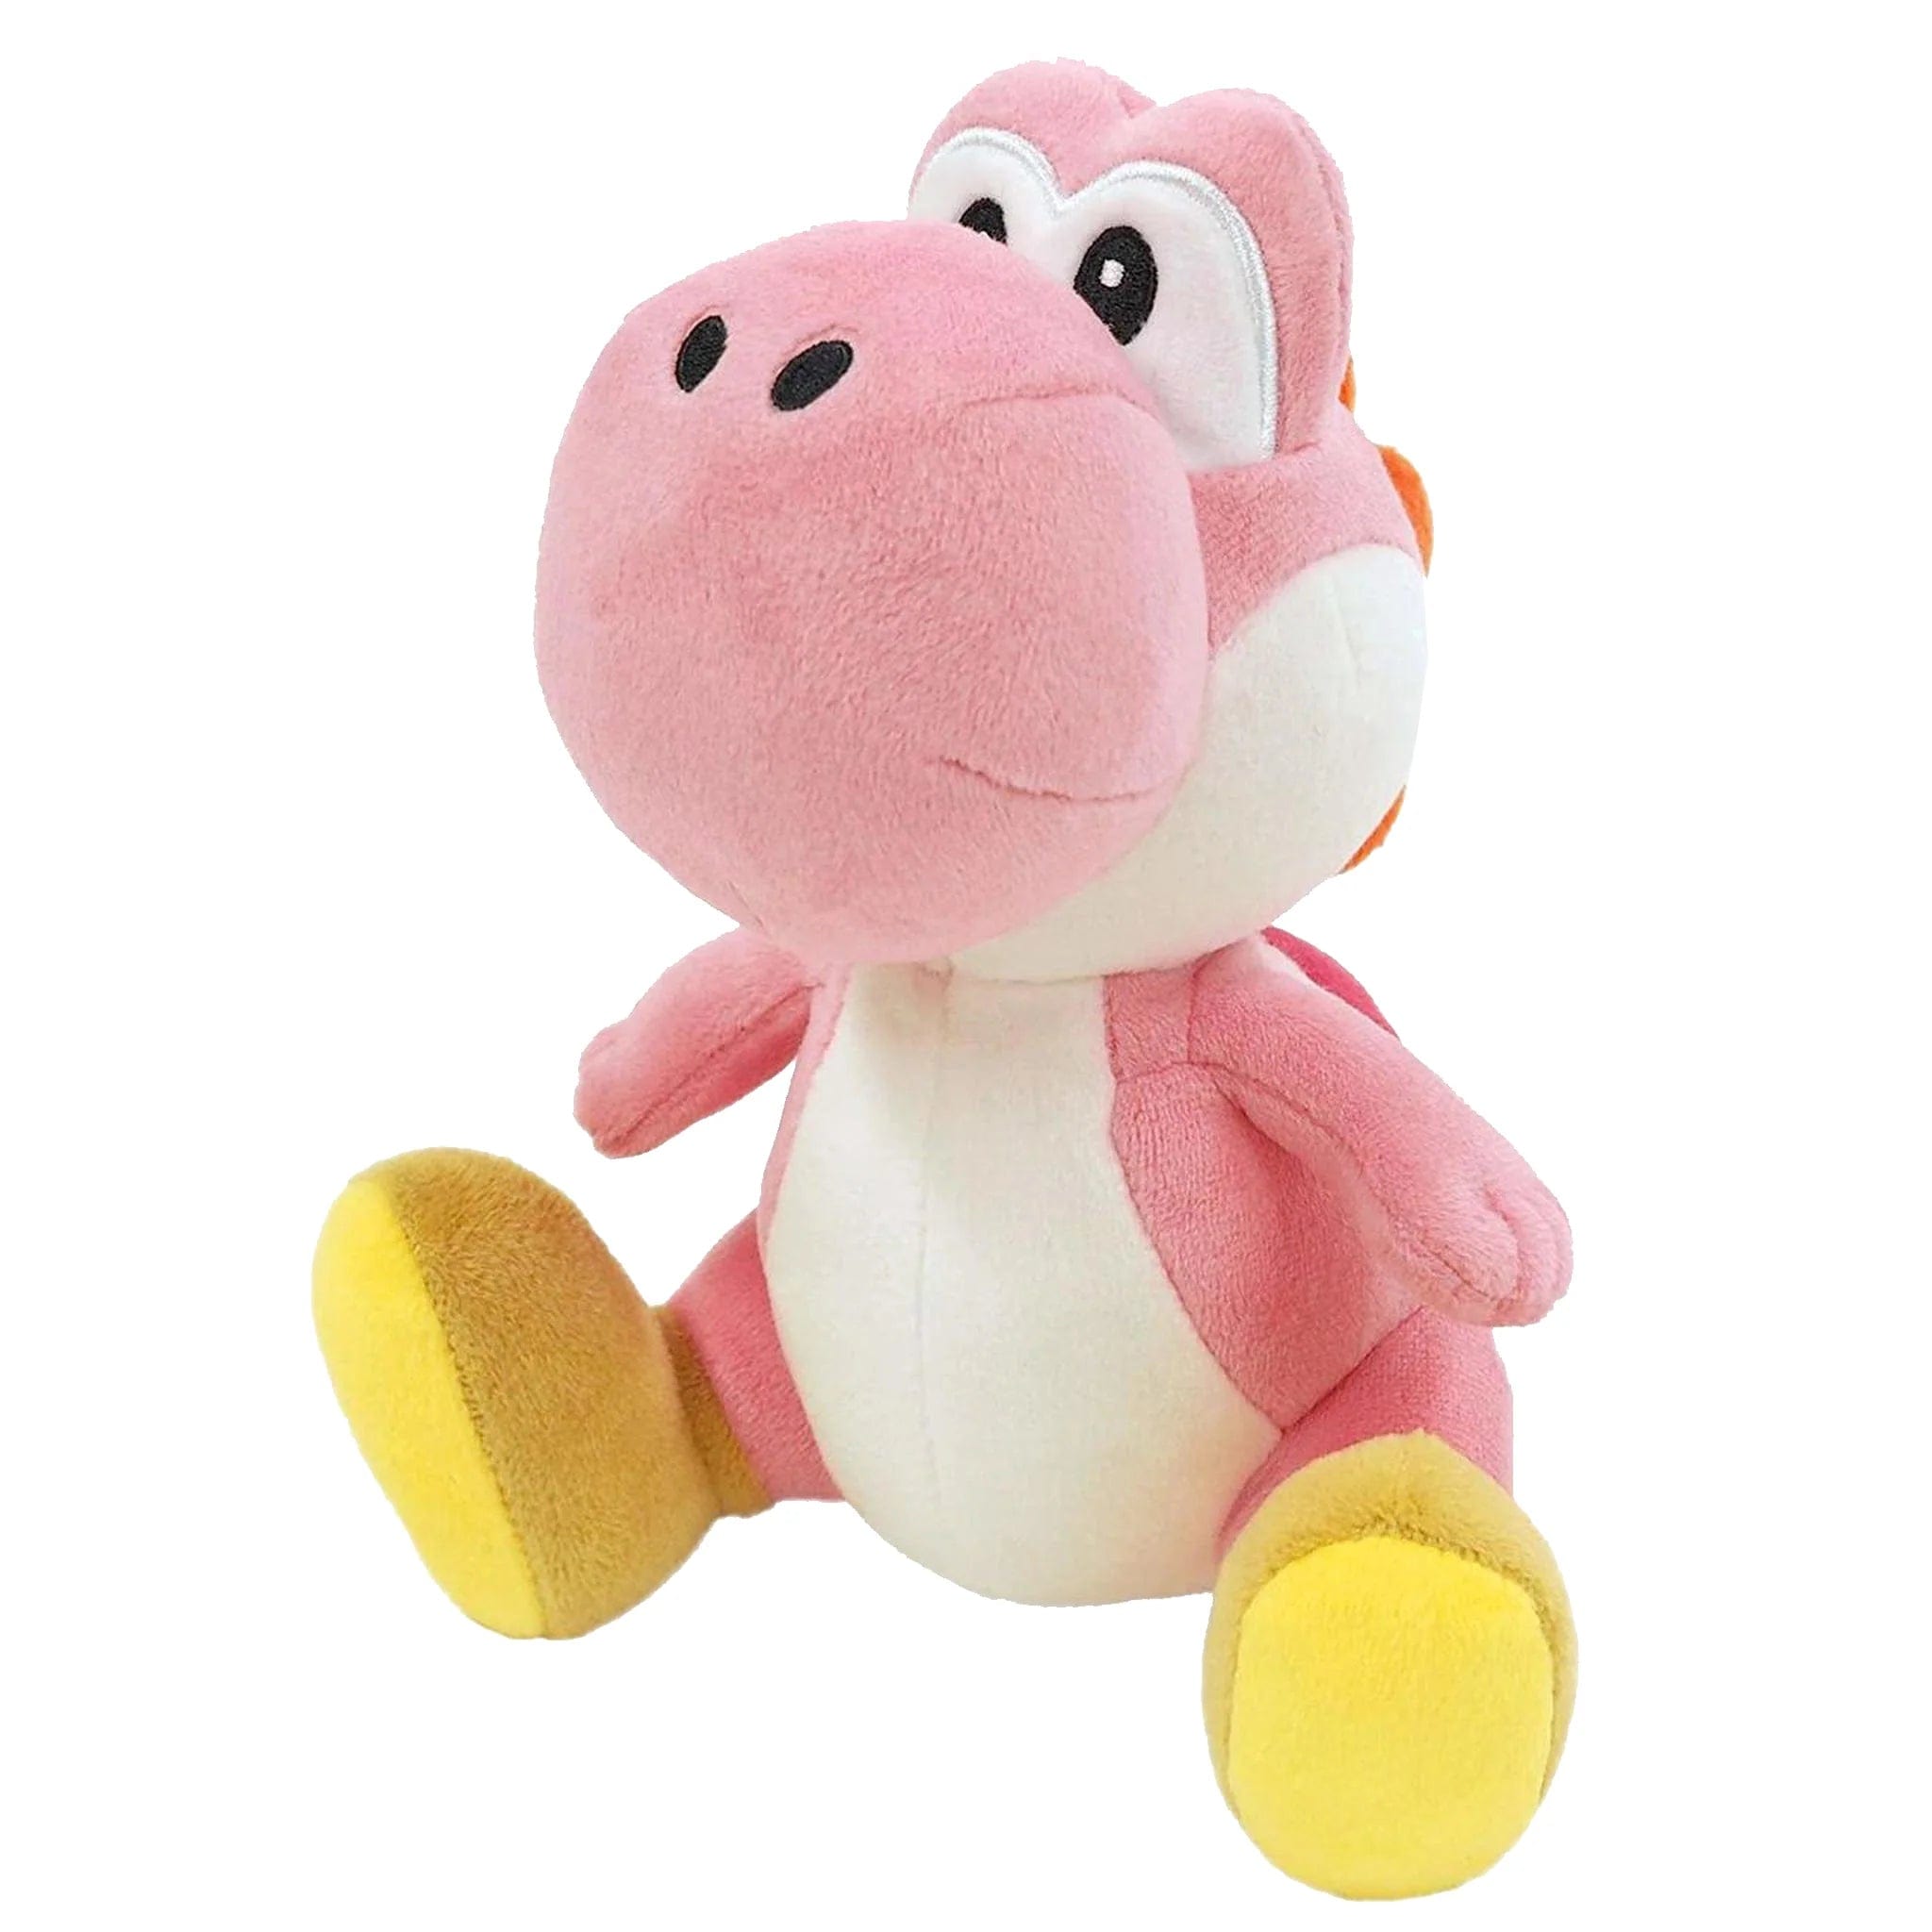 Little Buddy Super Mario All Star Yoshi - Pink Yoshi Plush 7"